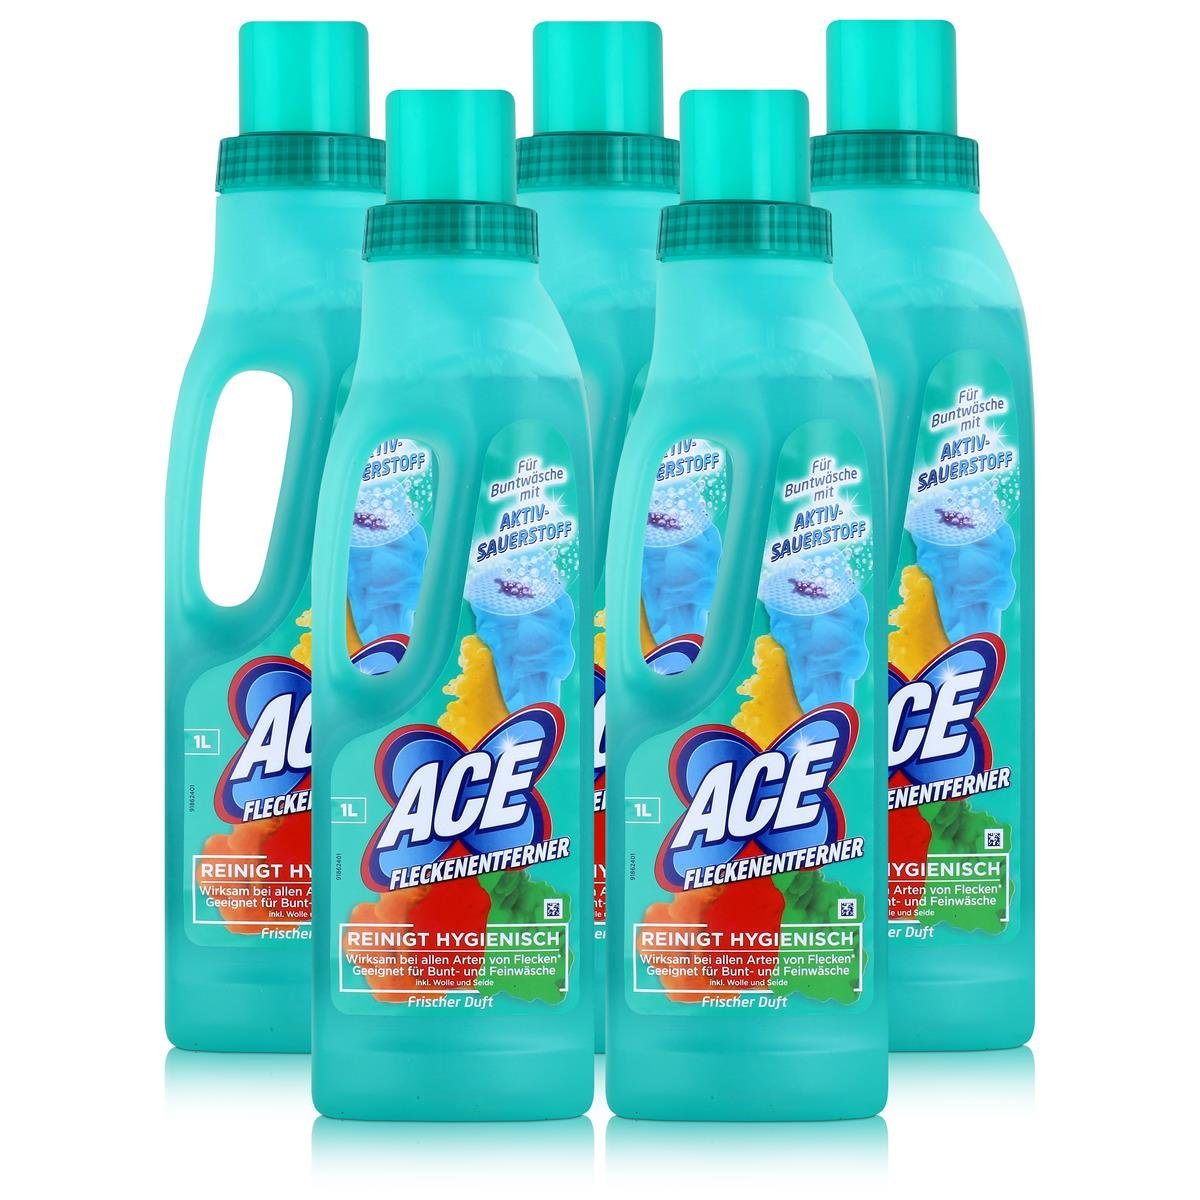 ACE ACE Fleckenentferner Frische Duft 1L - Reinigt Hygienisch (5er Pack) Fleckentferner